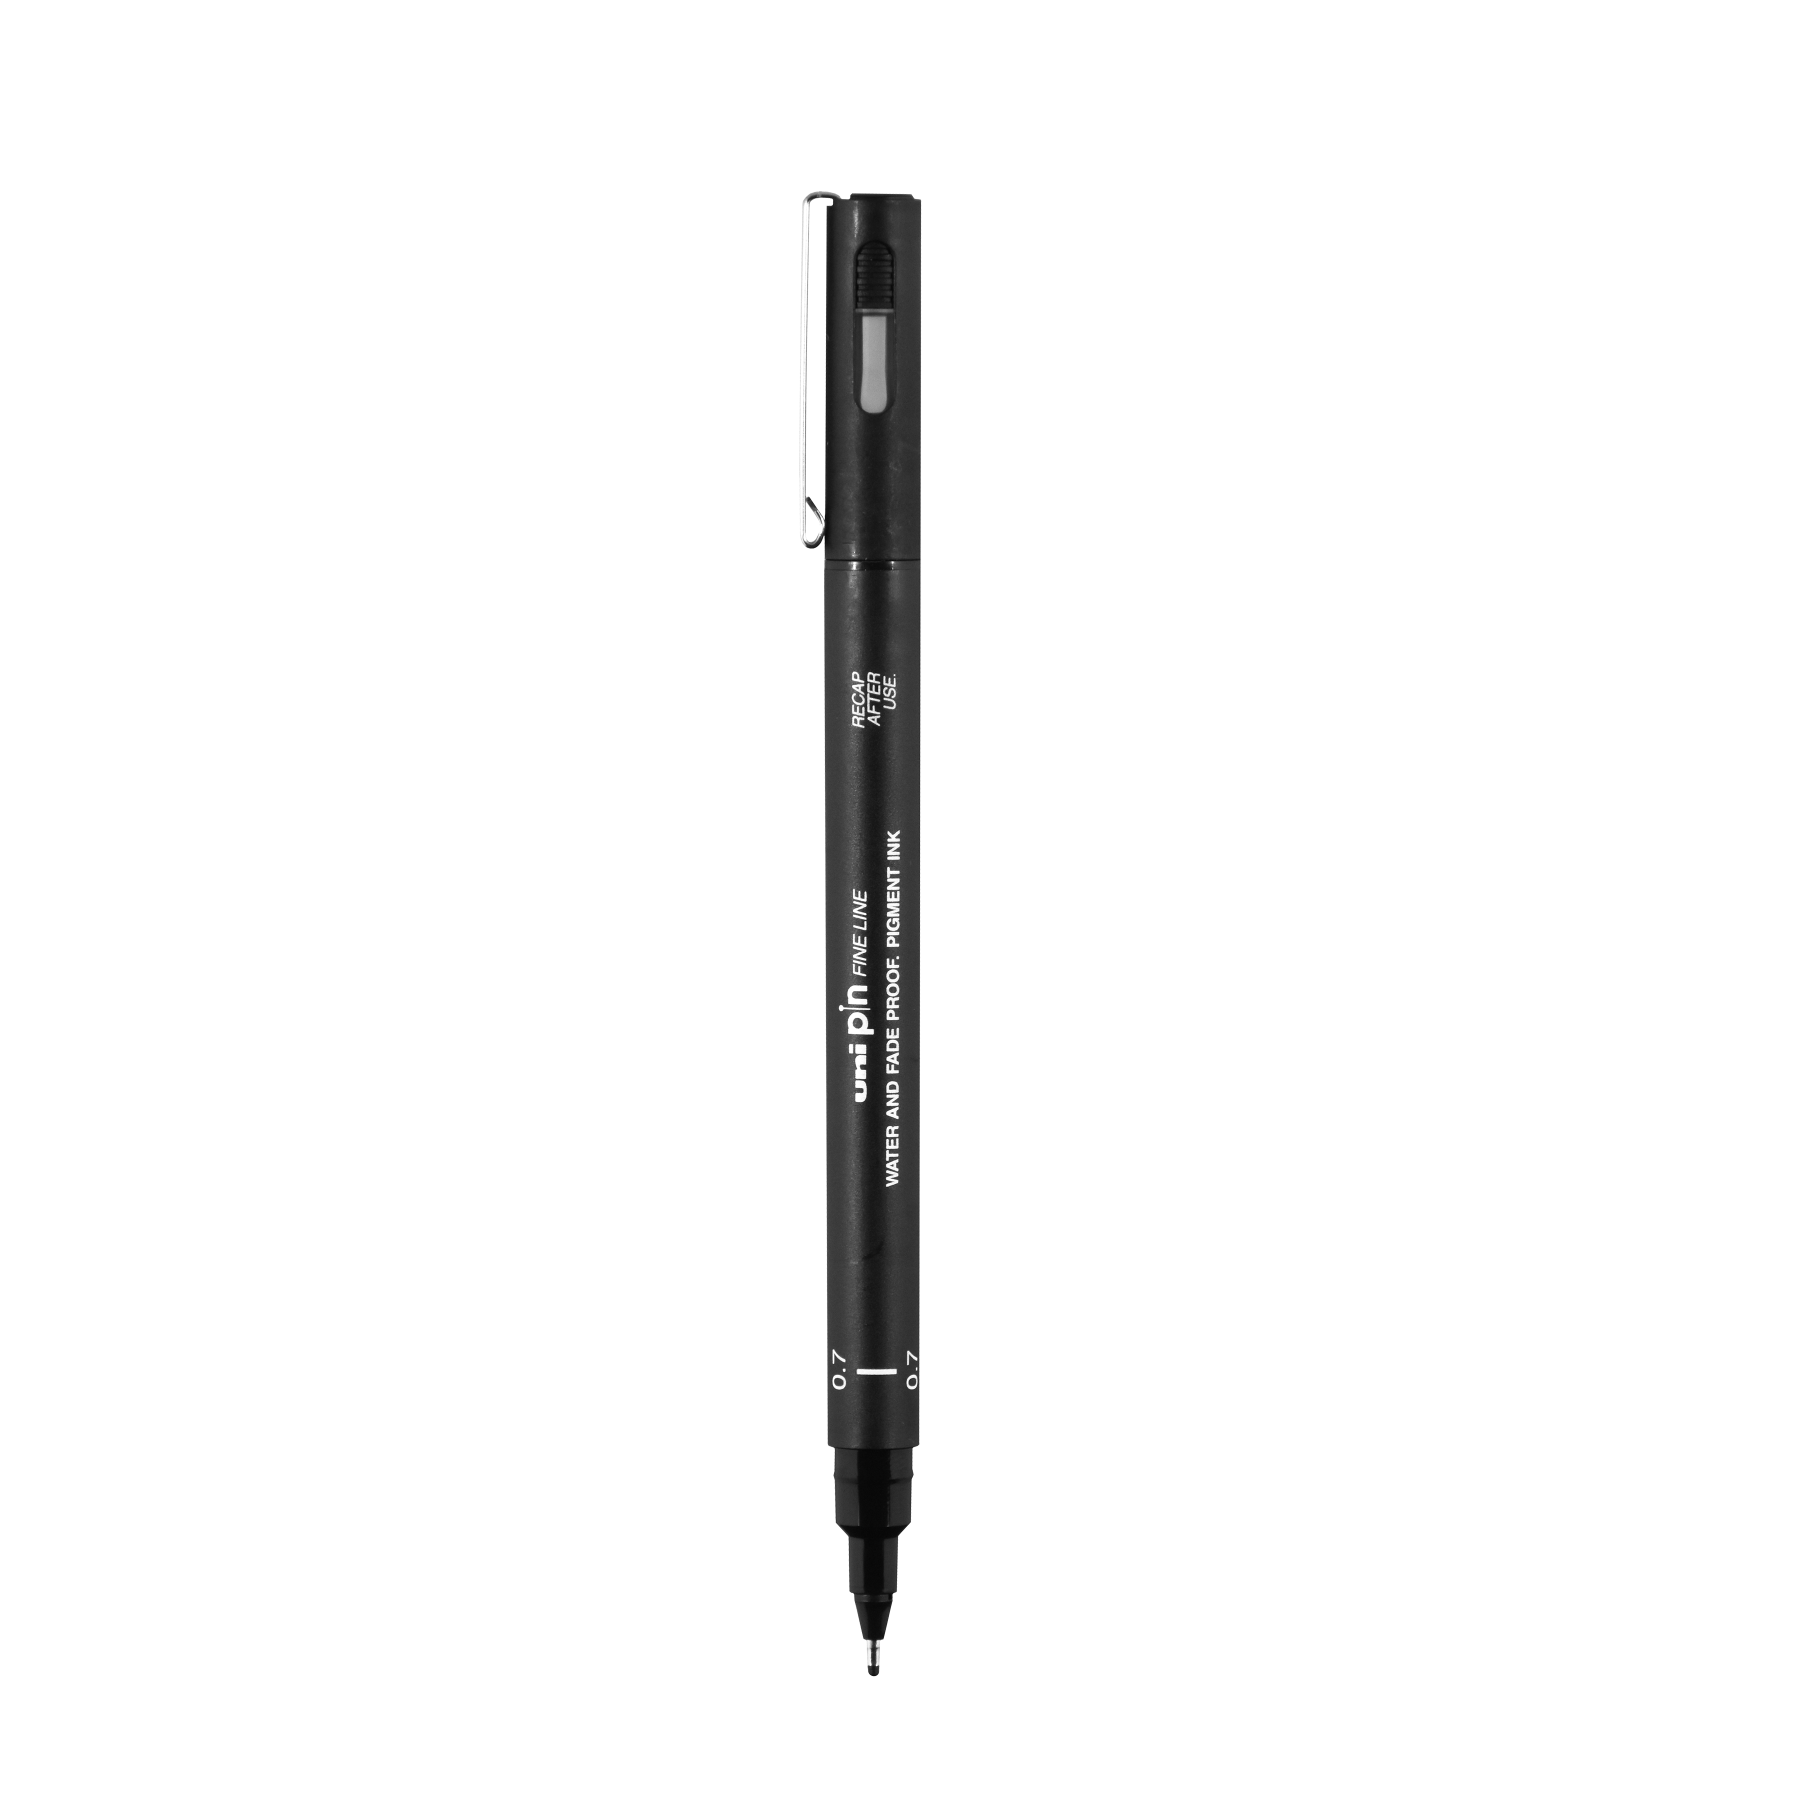 uni® Pin, Fine Line Drawing Pen (0.7mm)